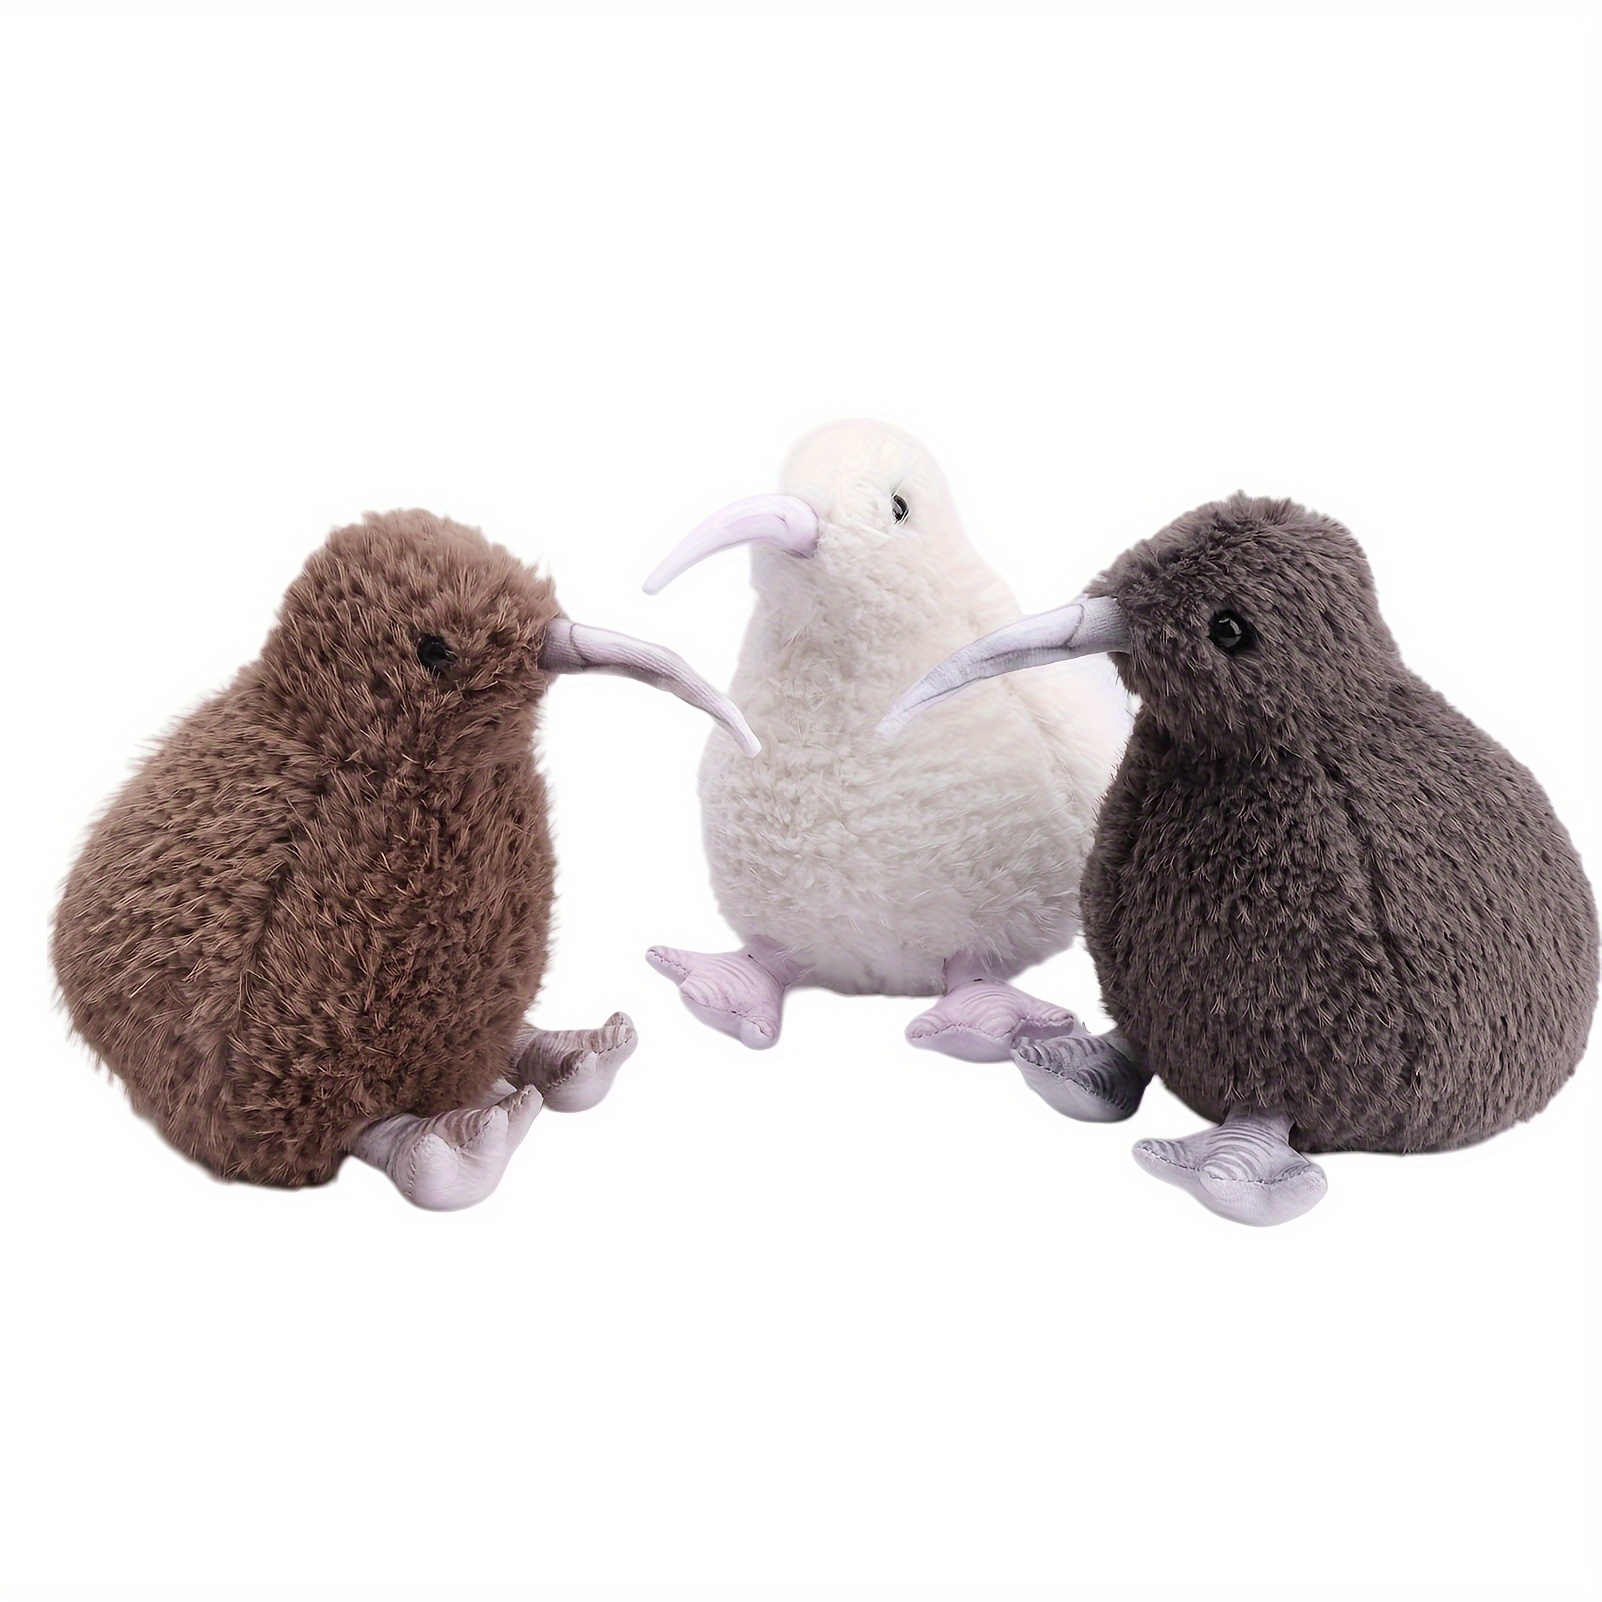 

20cm/7.87in Kiwi Bird Plush Toy - Soft, Realistic Furry Bird Doll - Ideal Present For Boys, Girls, And Everyone